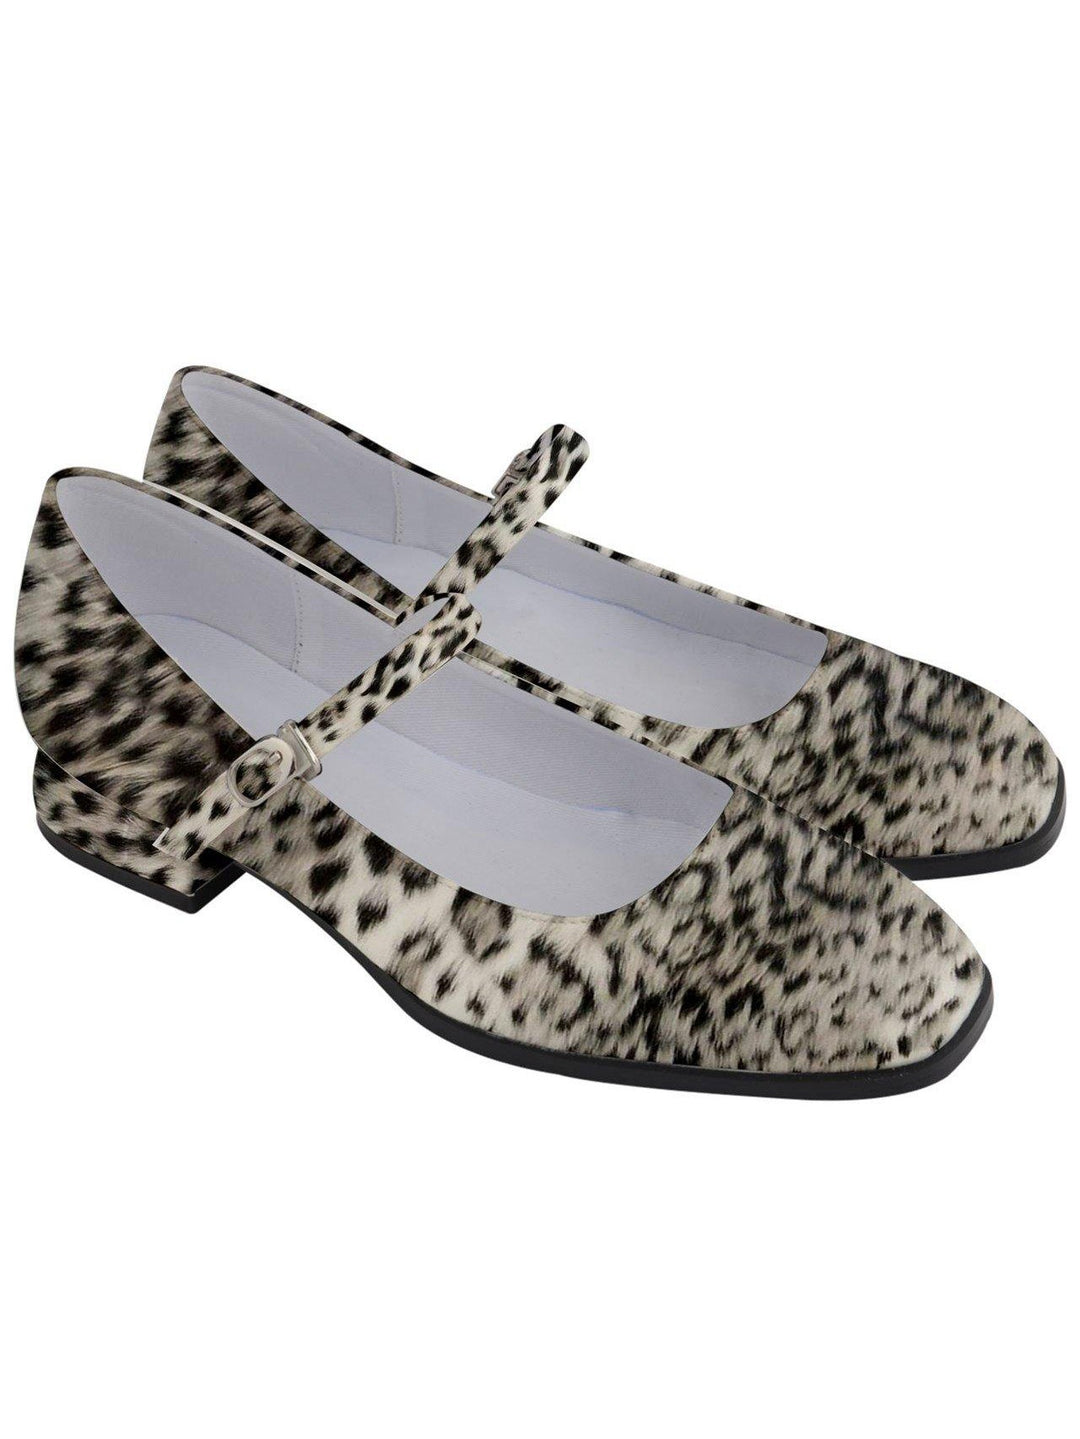 Streetwalkin' Cheetah Women's Mary Jane Shoes